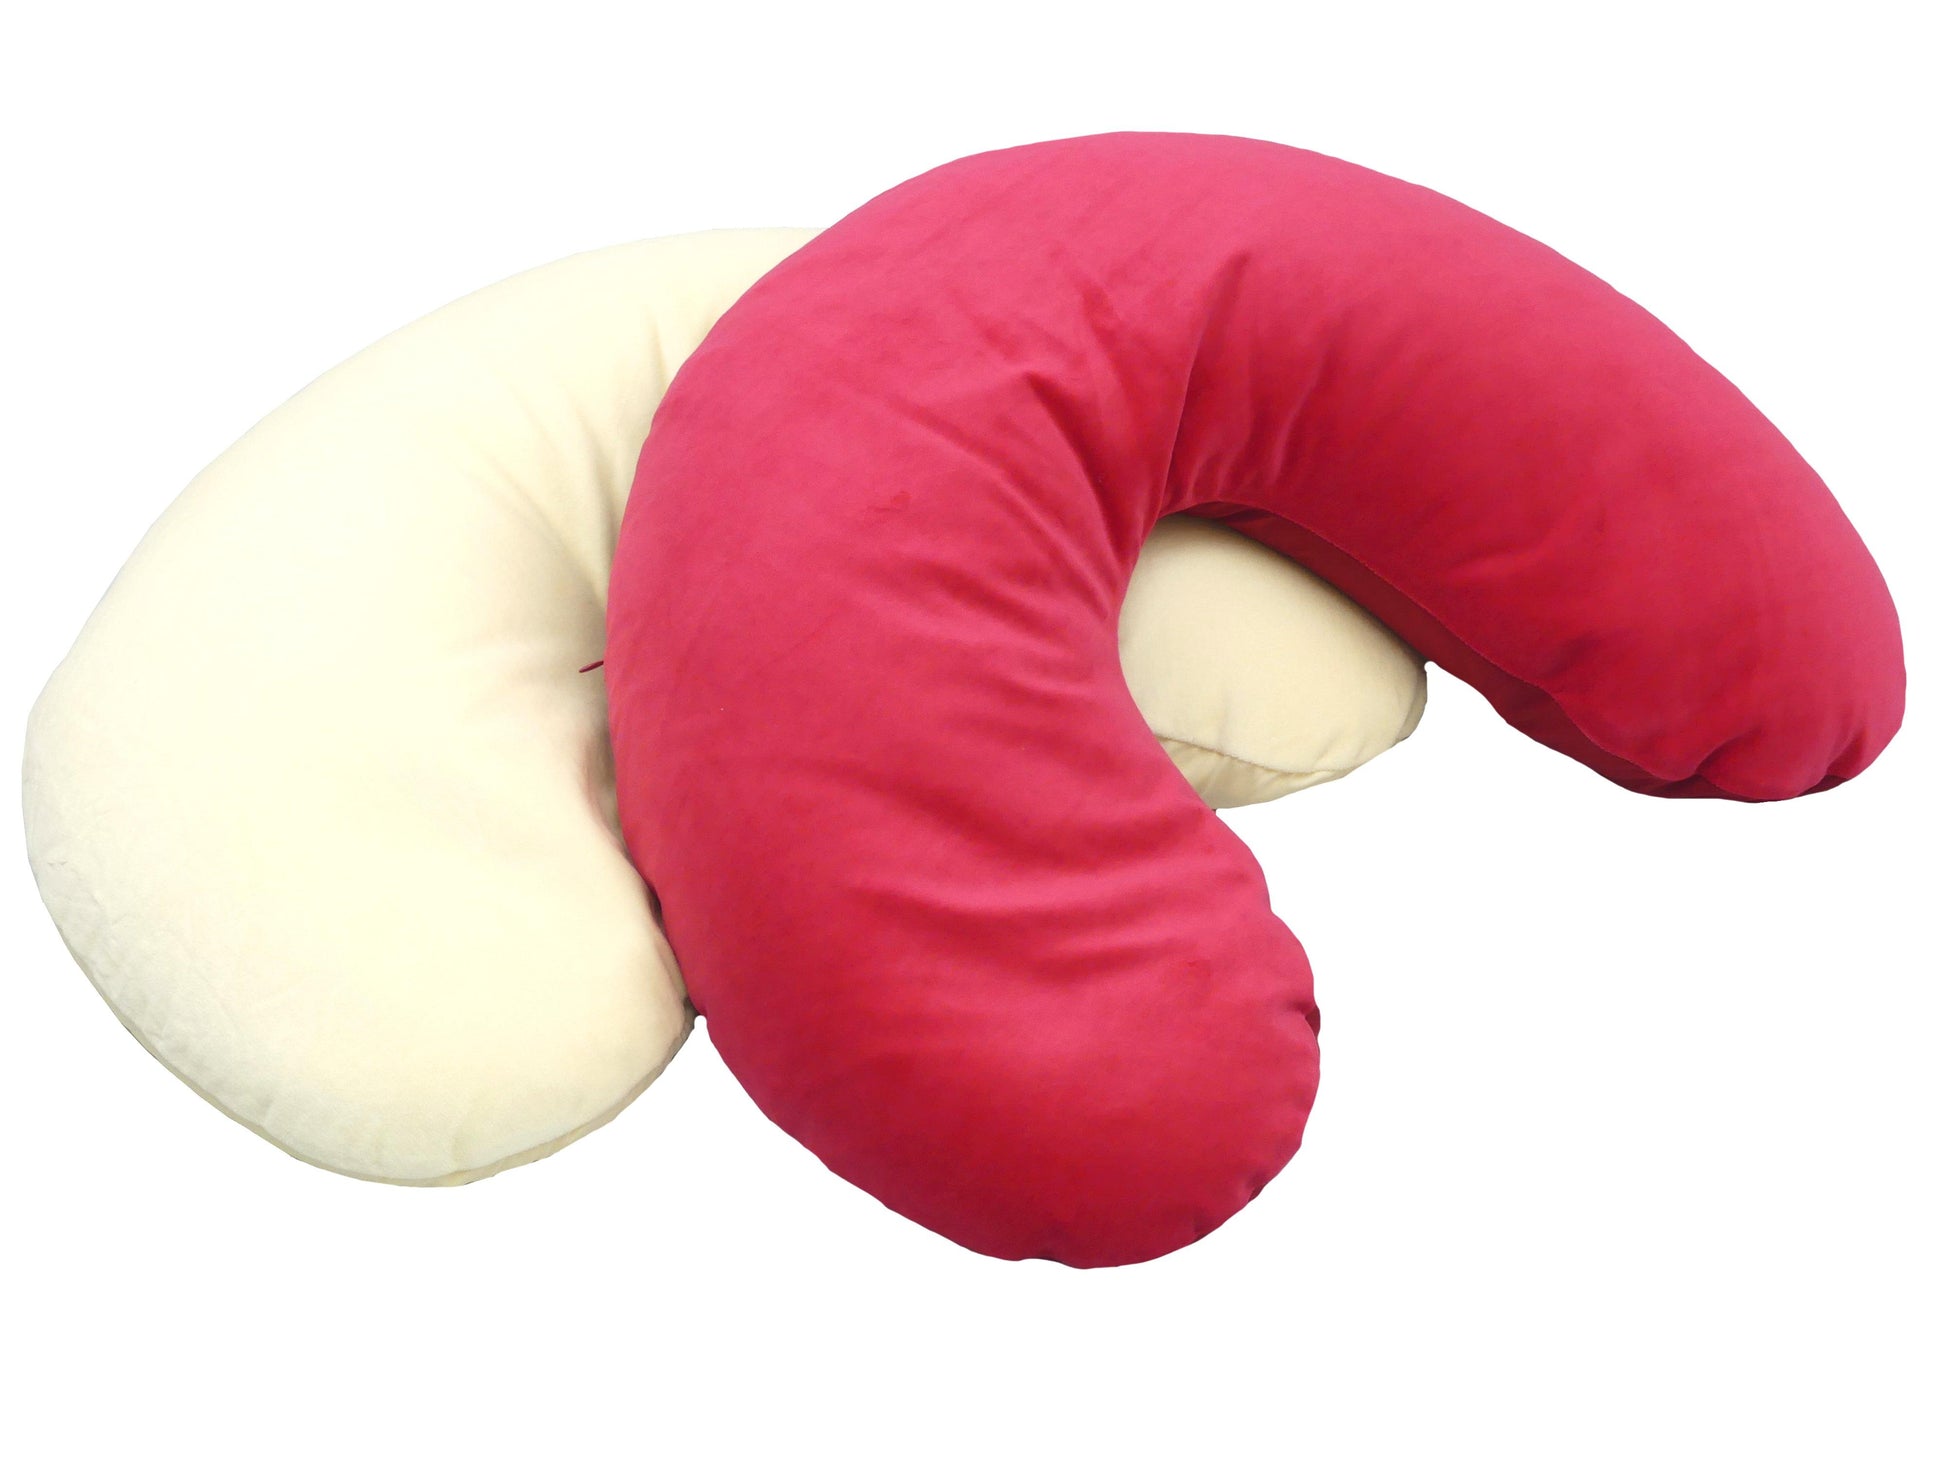 arm support cushion